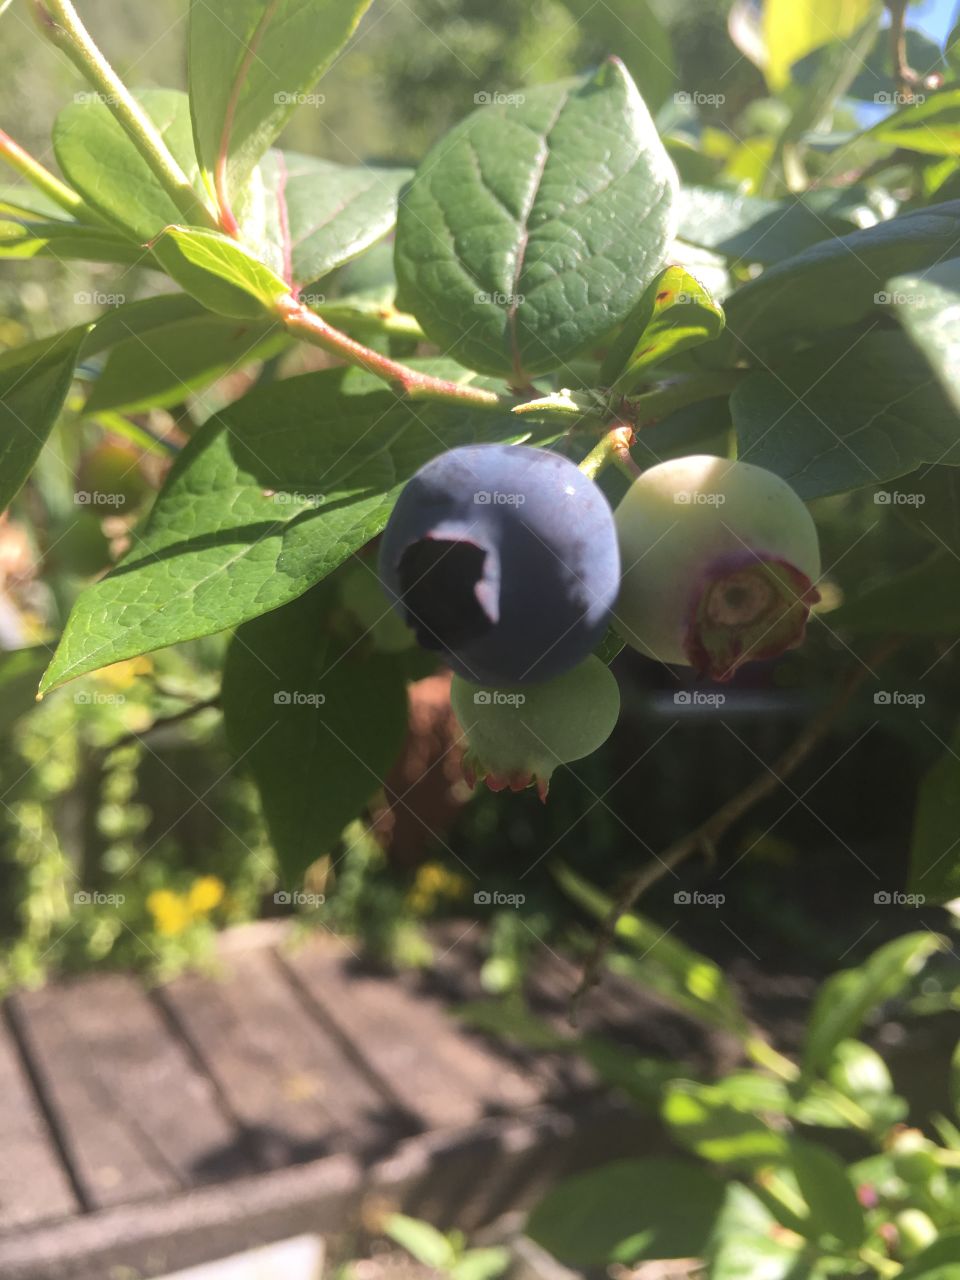 American blueberry 